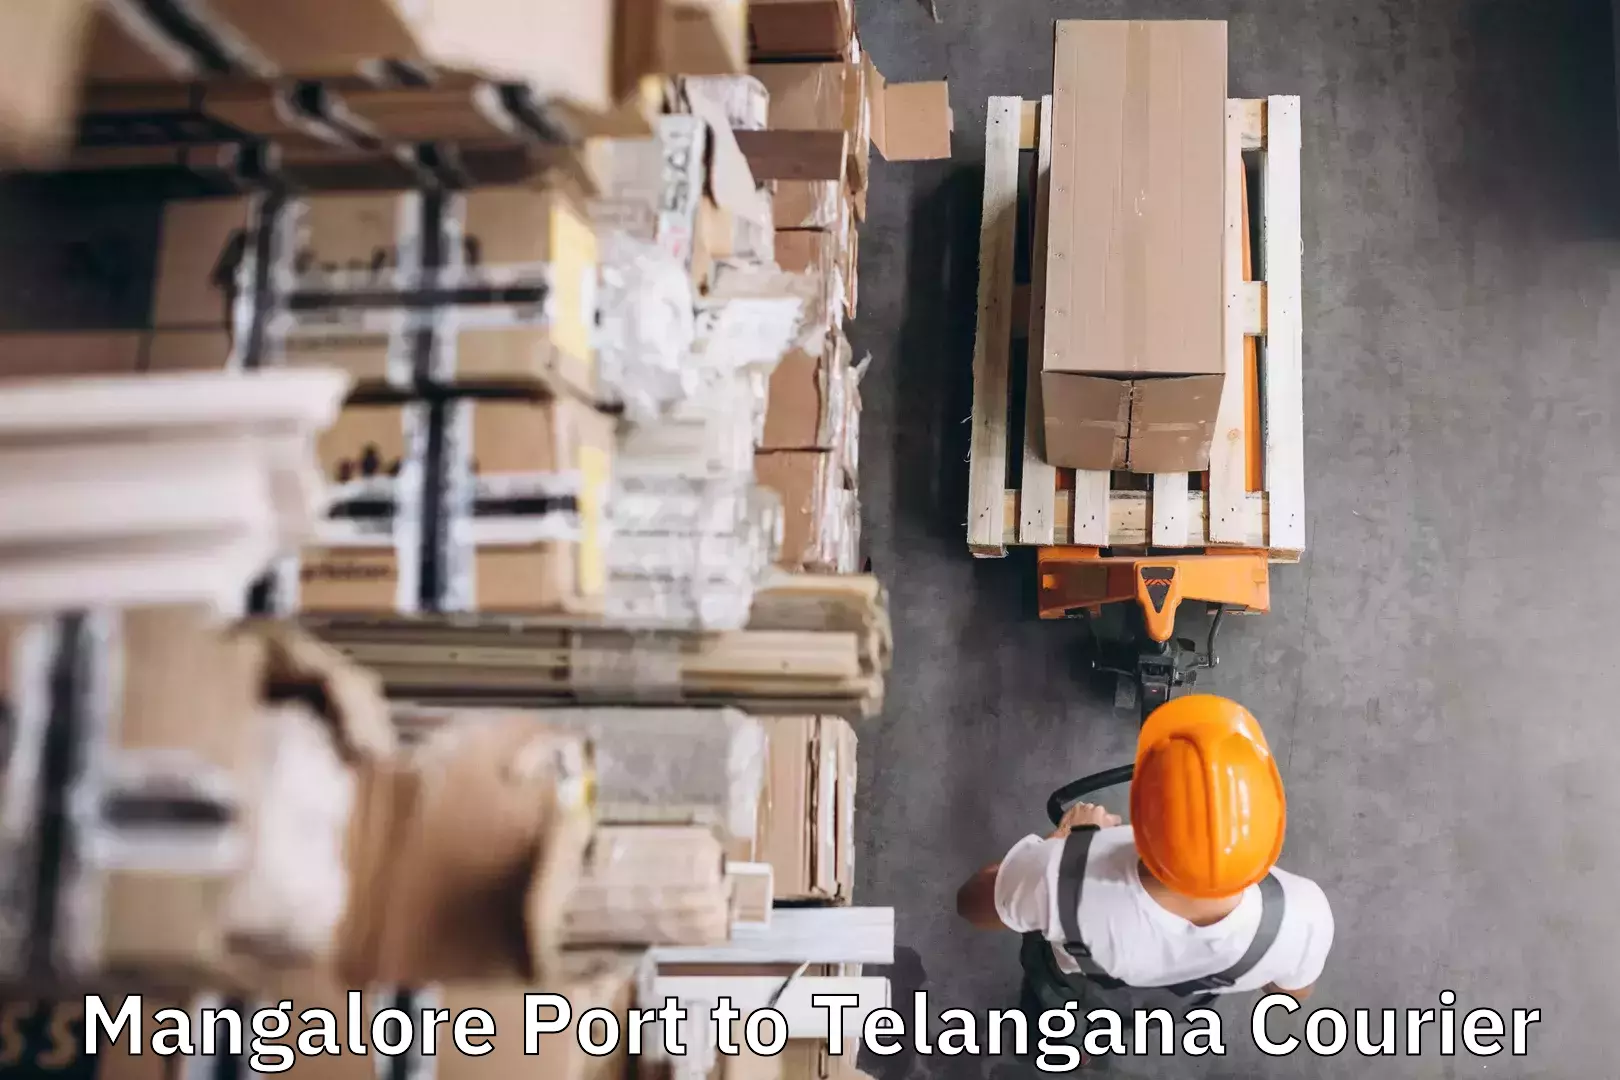 Luggage delivery app Mangalore Port to Jangaon